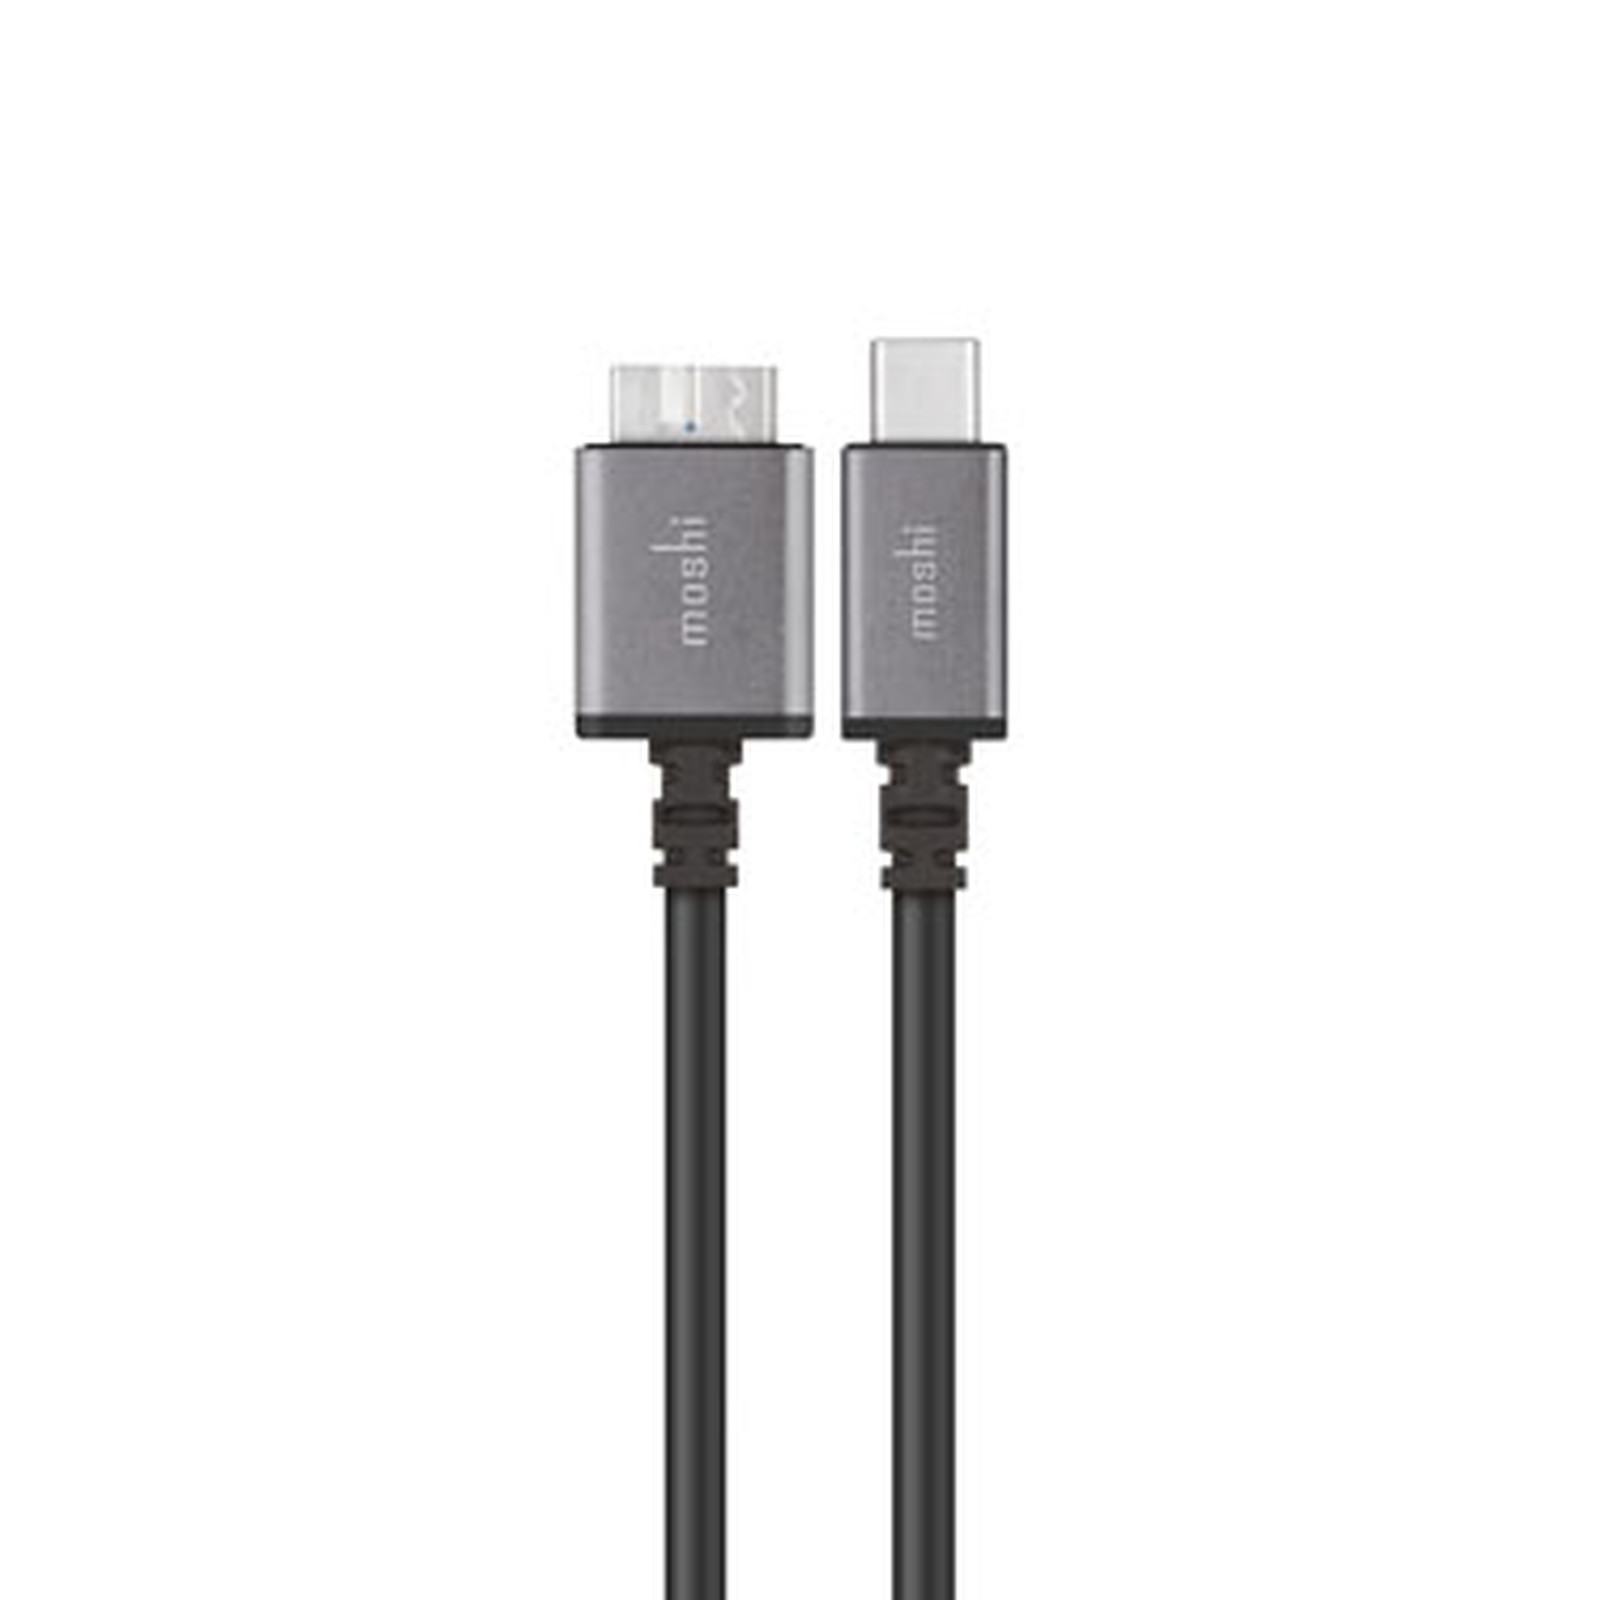 MOSHI USB C vers Micro B Cable noir - Accessoires Apple Moshi